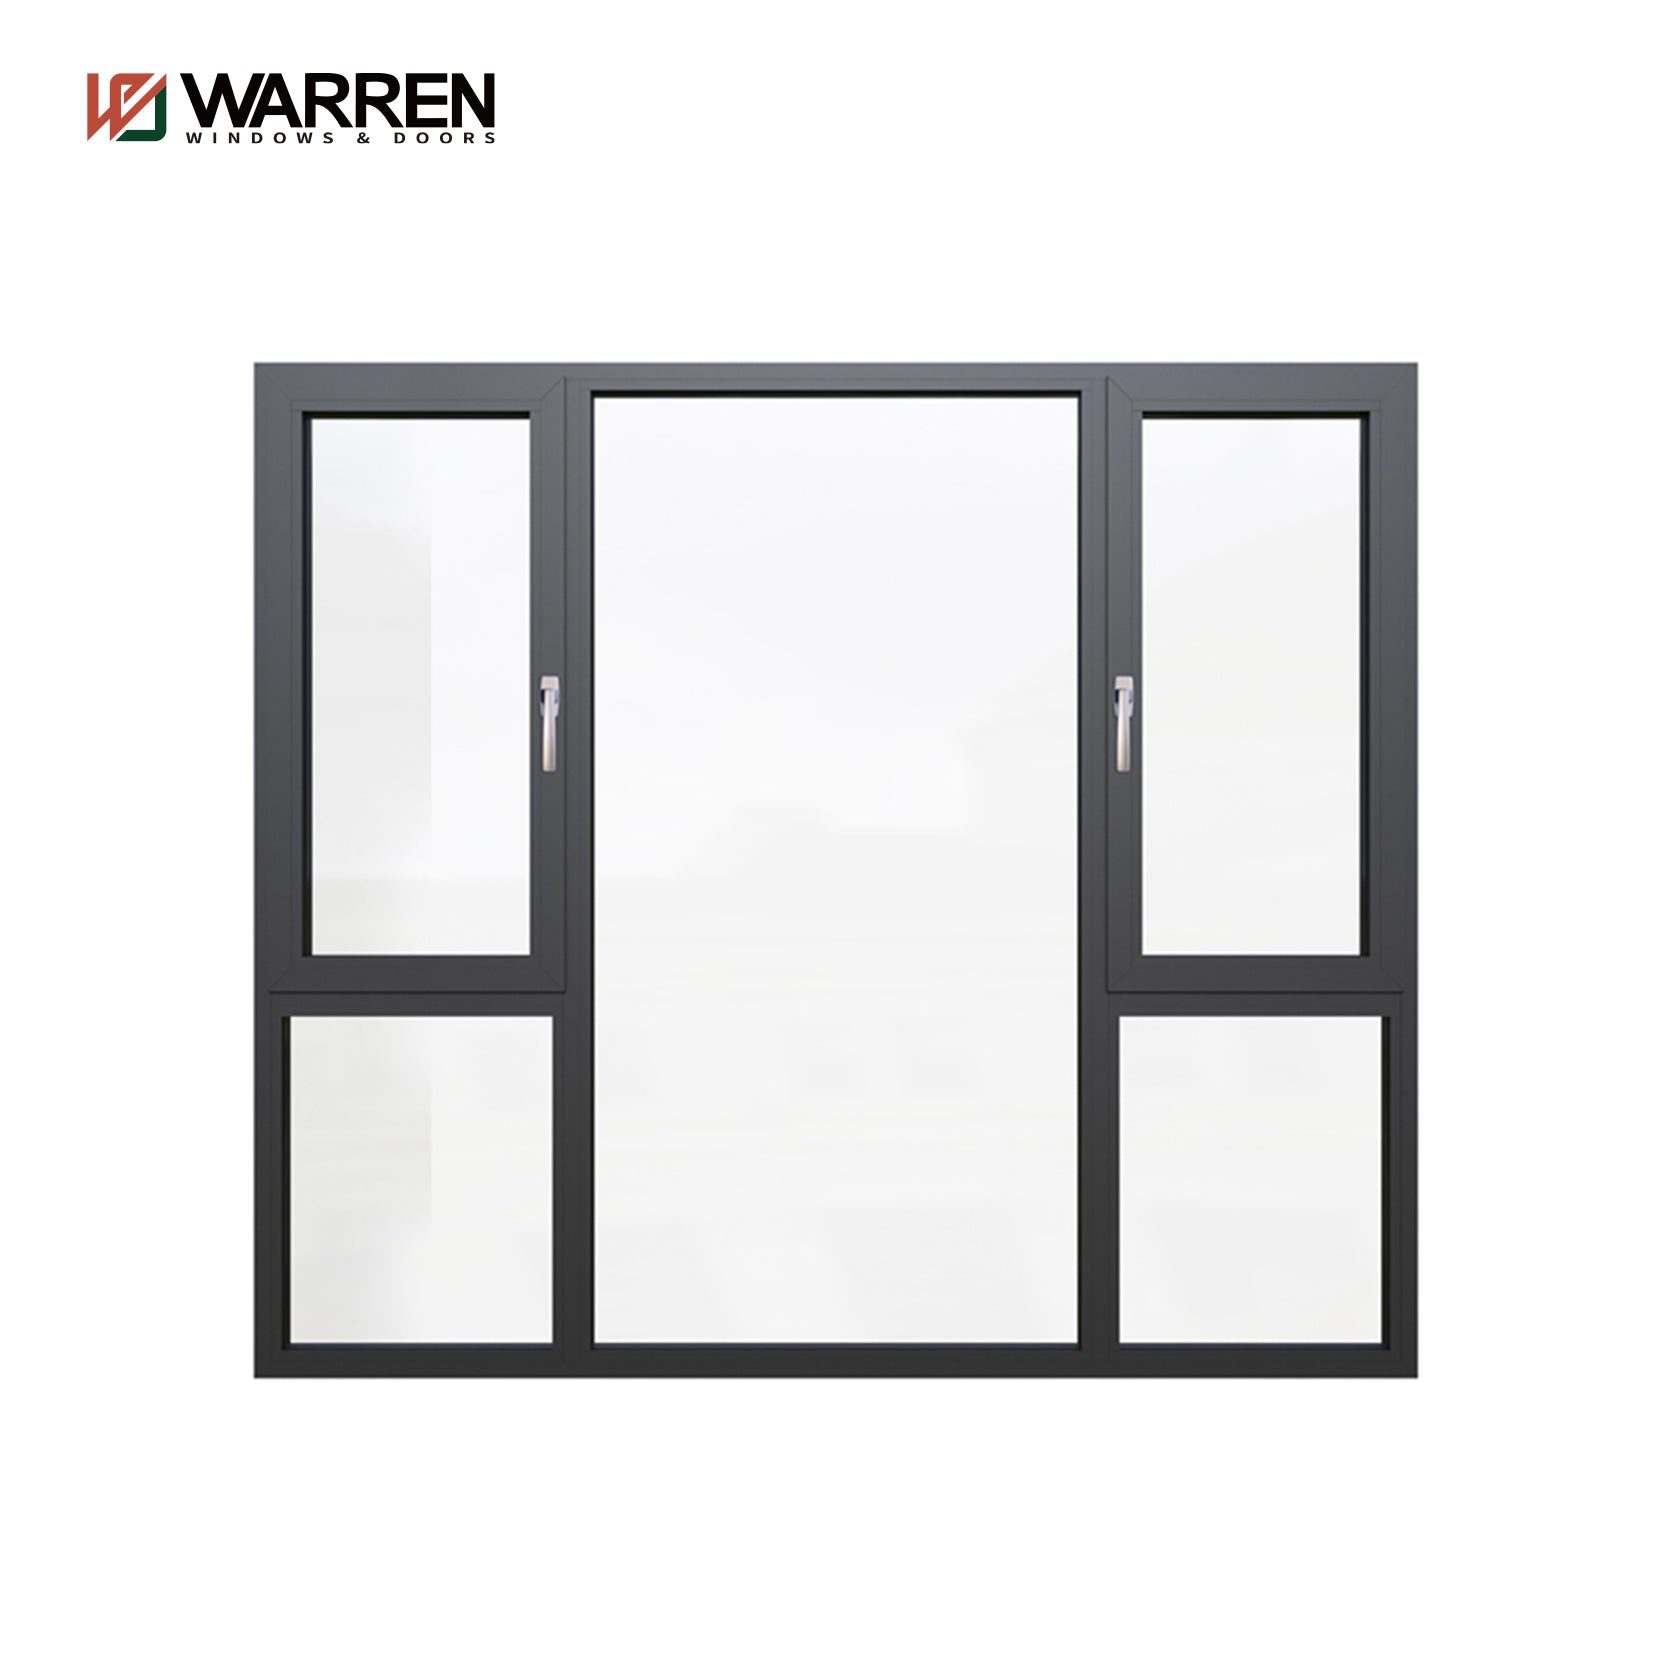 Warren Professional Custom Doors And Windows Factory Double Glass Aluminum Frame Casement Window Aluminum Passive Window